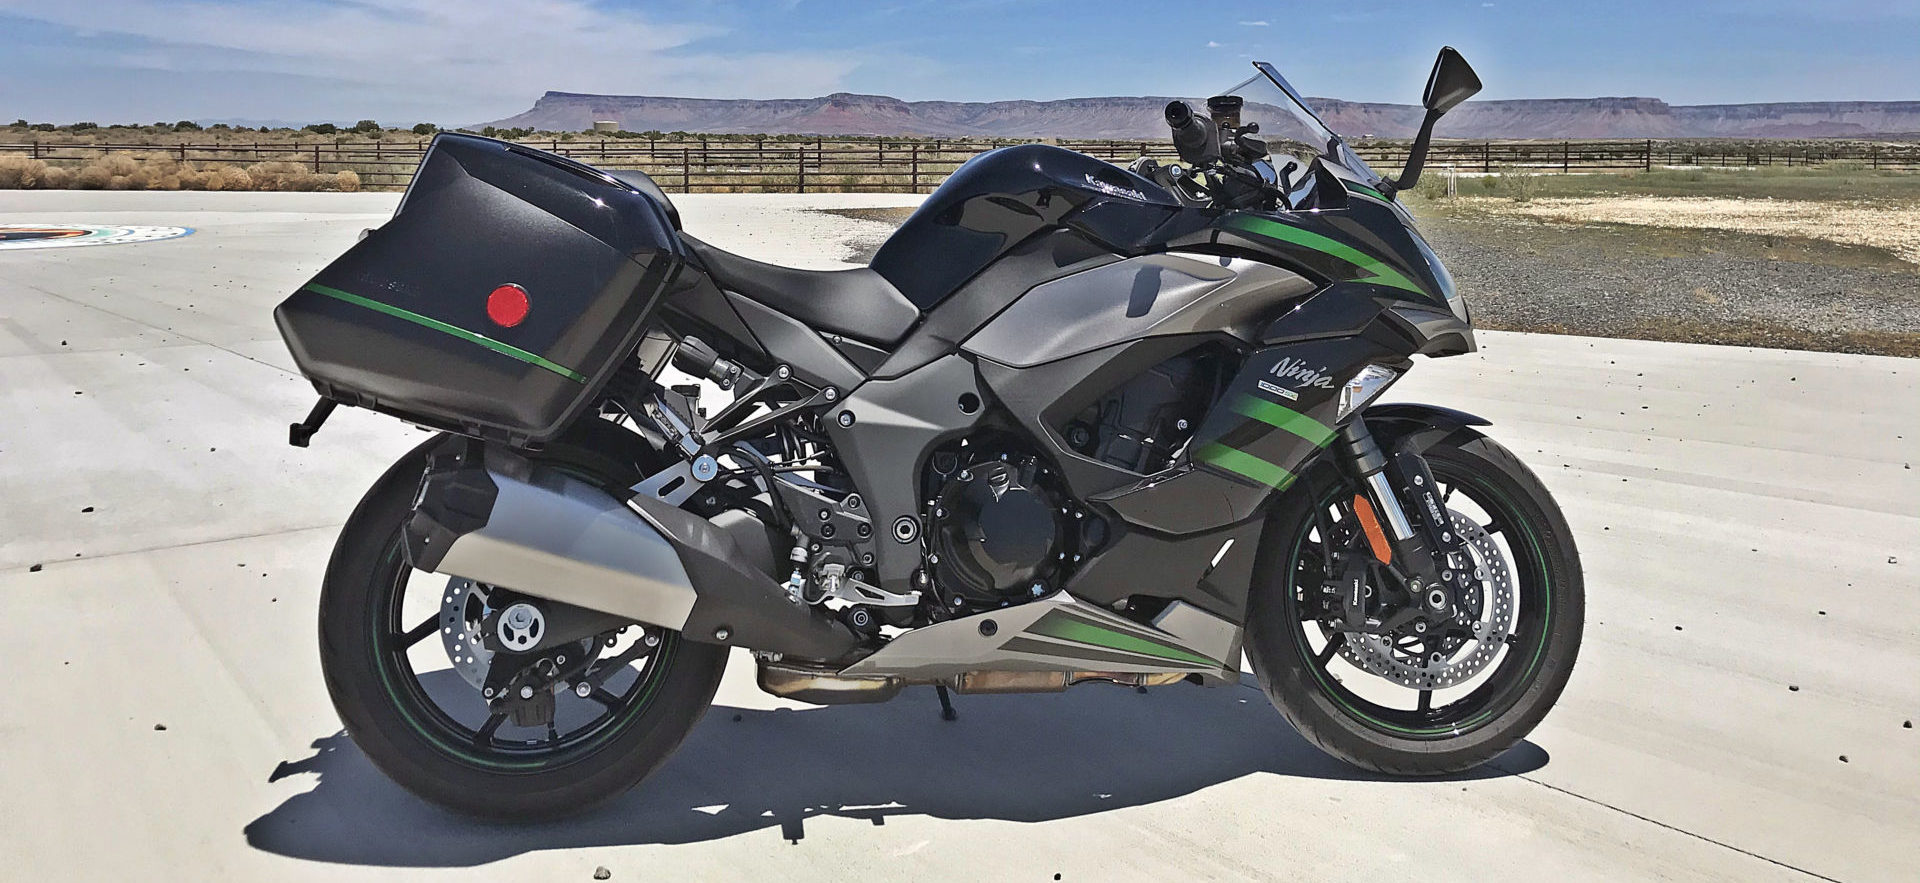 A 2020-model Kawasaki Ninja 1000SX at the west rim of the Grand Canyon. Photo by Michael Gougis.